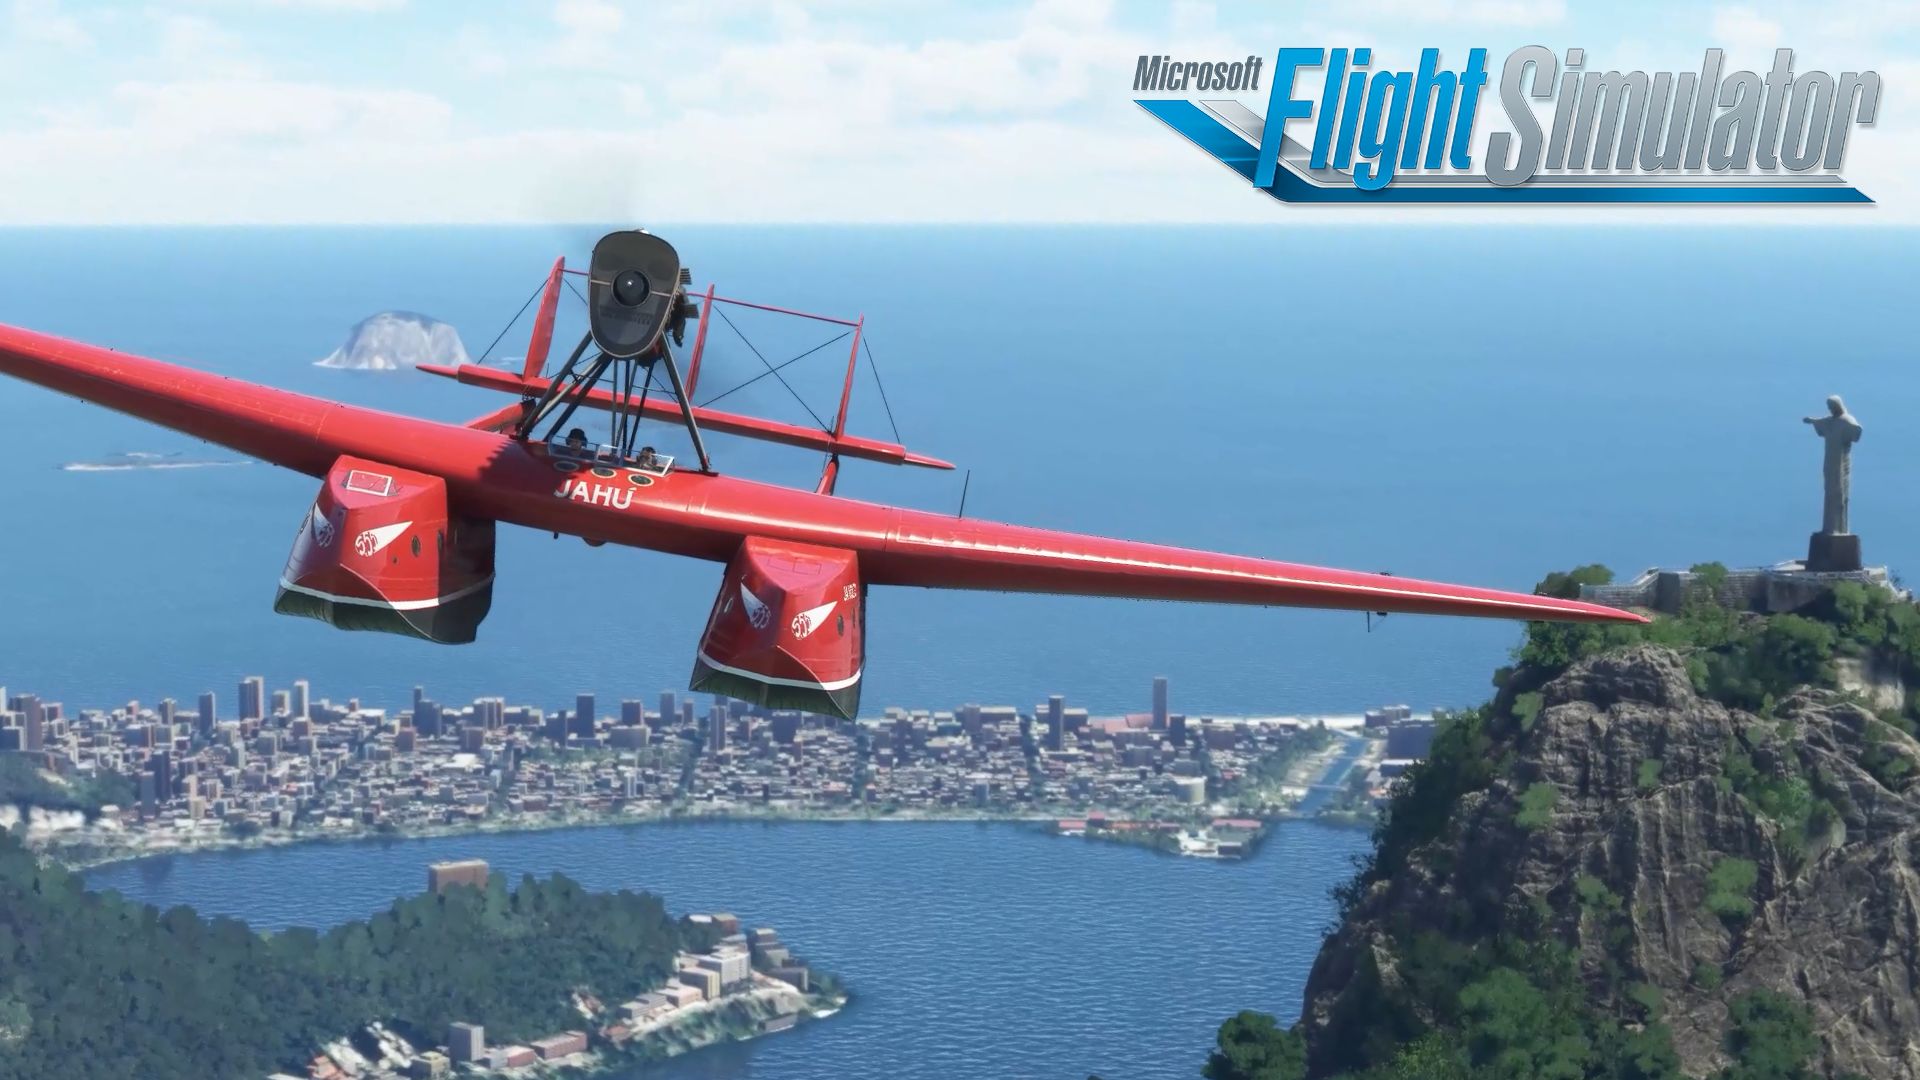 Video For Microsoft Flight Simulator Releases Famous Italian Aircraft as Local Legend #4: Savoia-Marchetti S.55